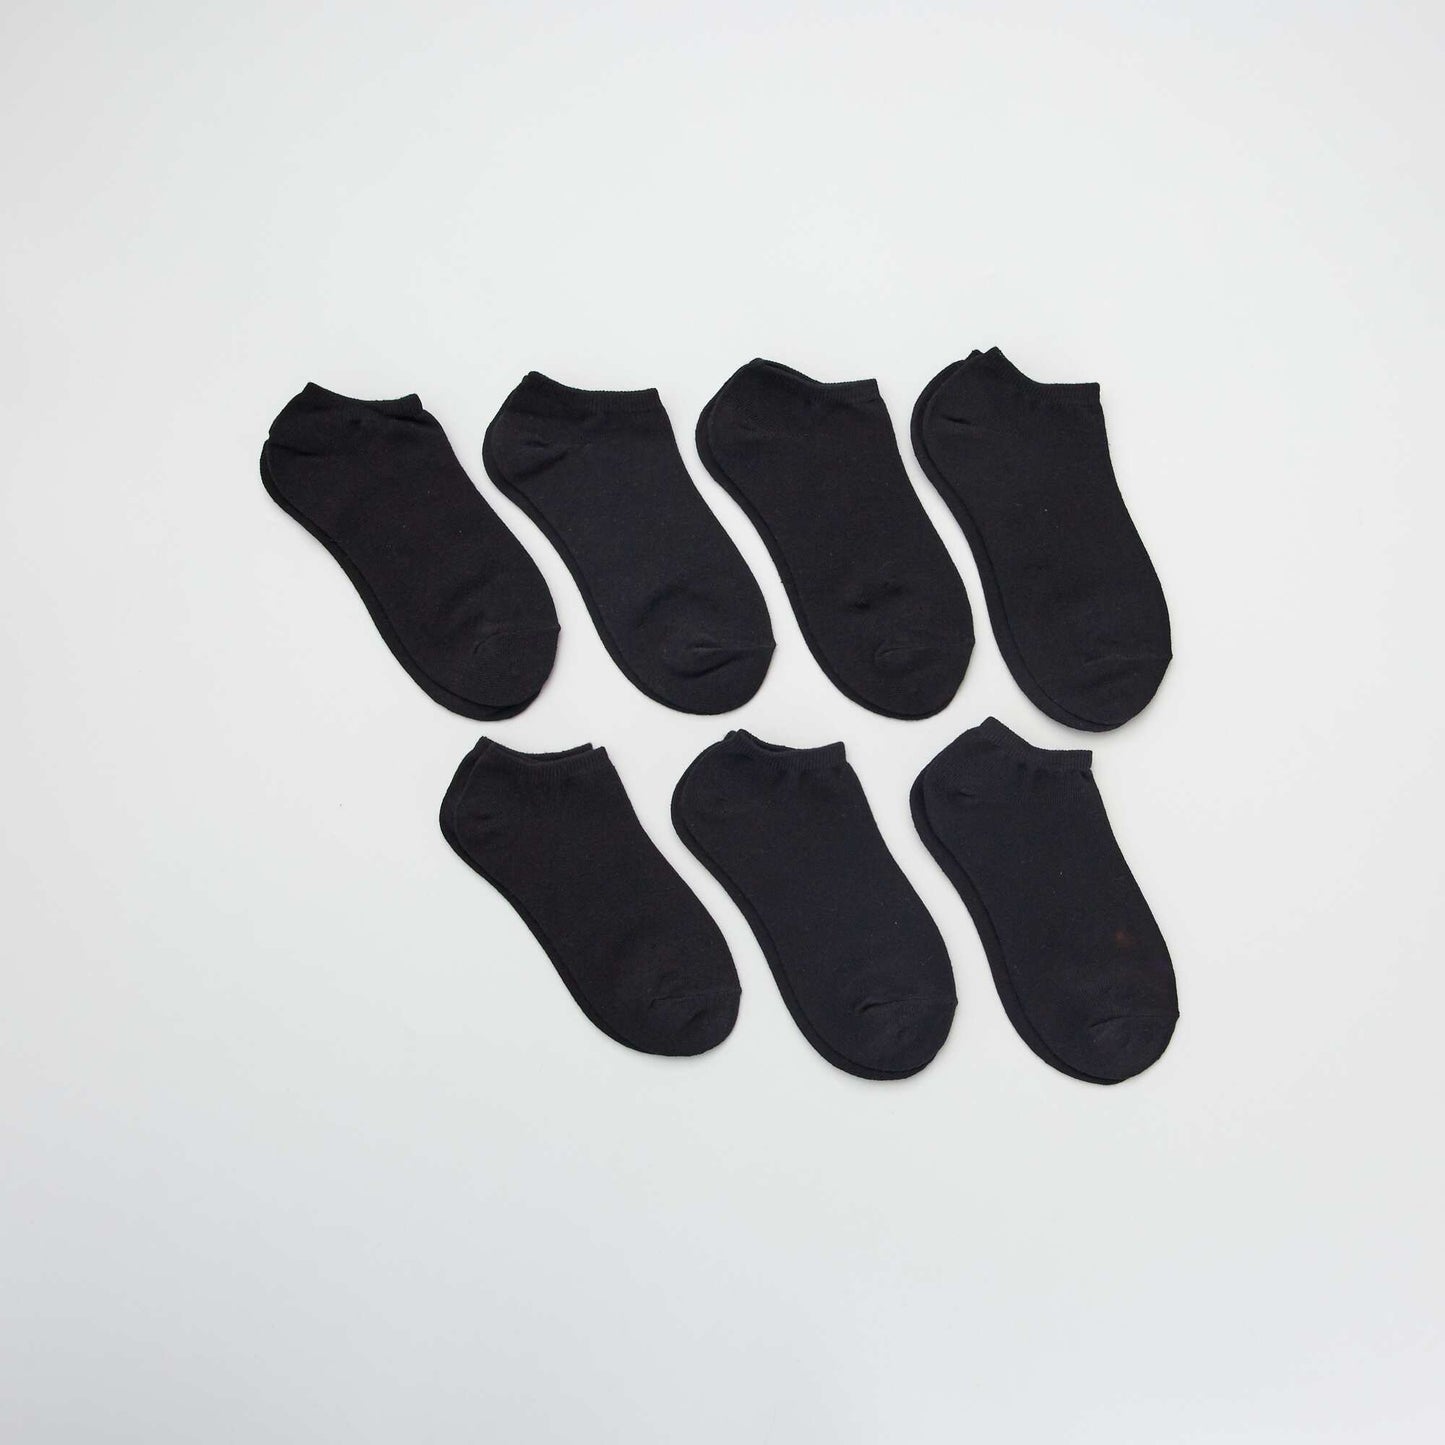 Pack of 7 pairs of trainer socks Black